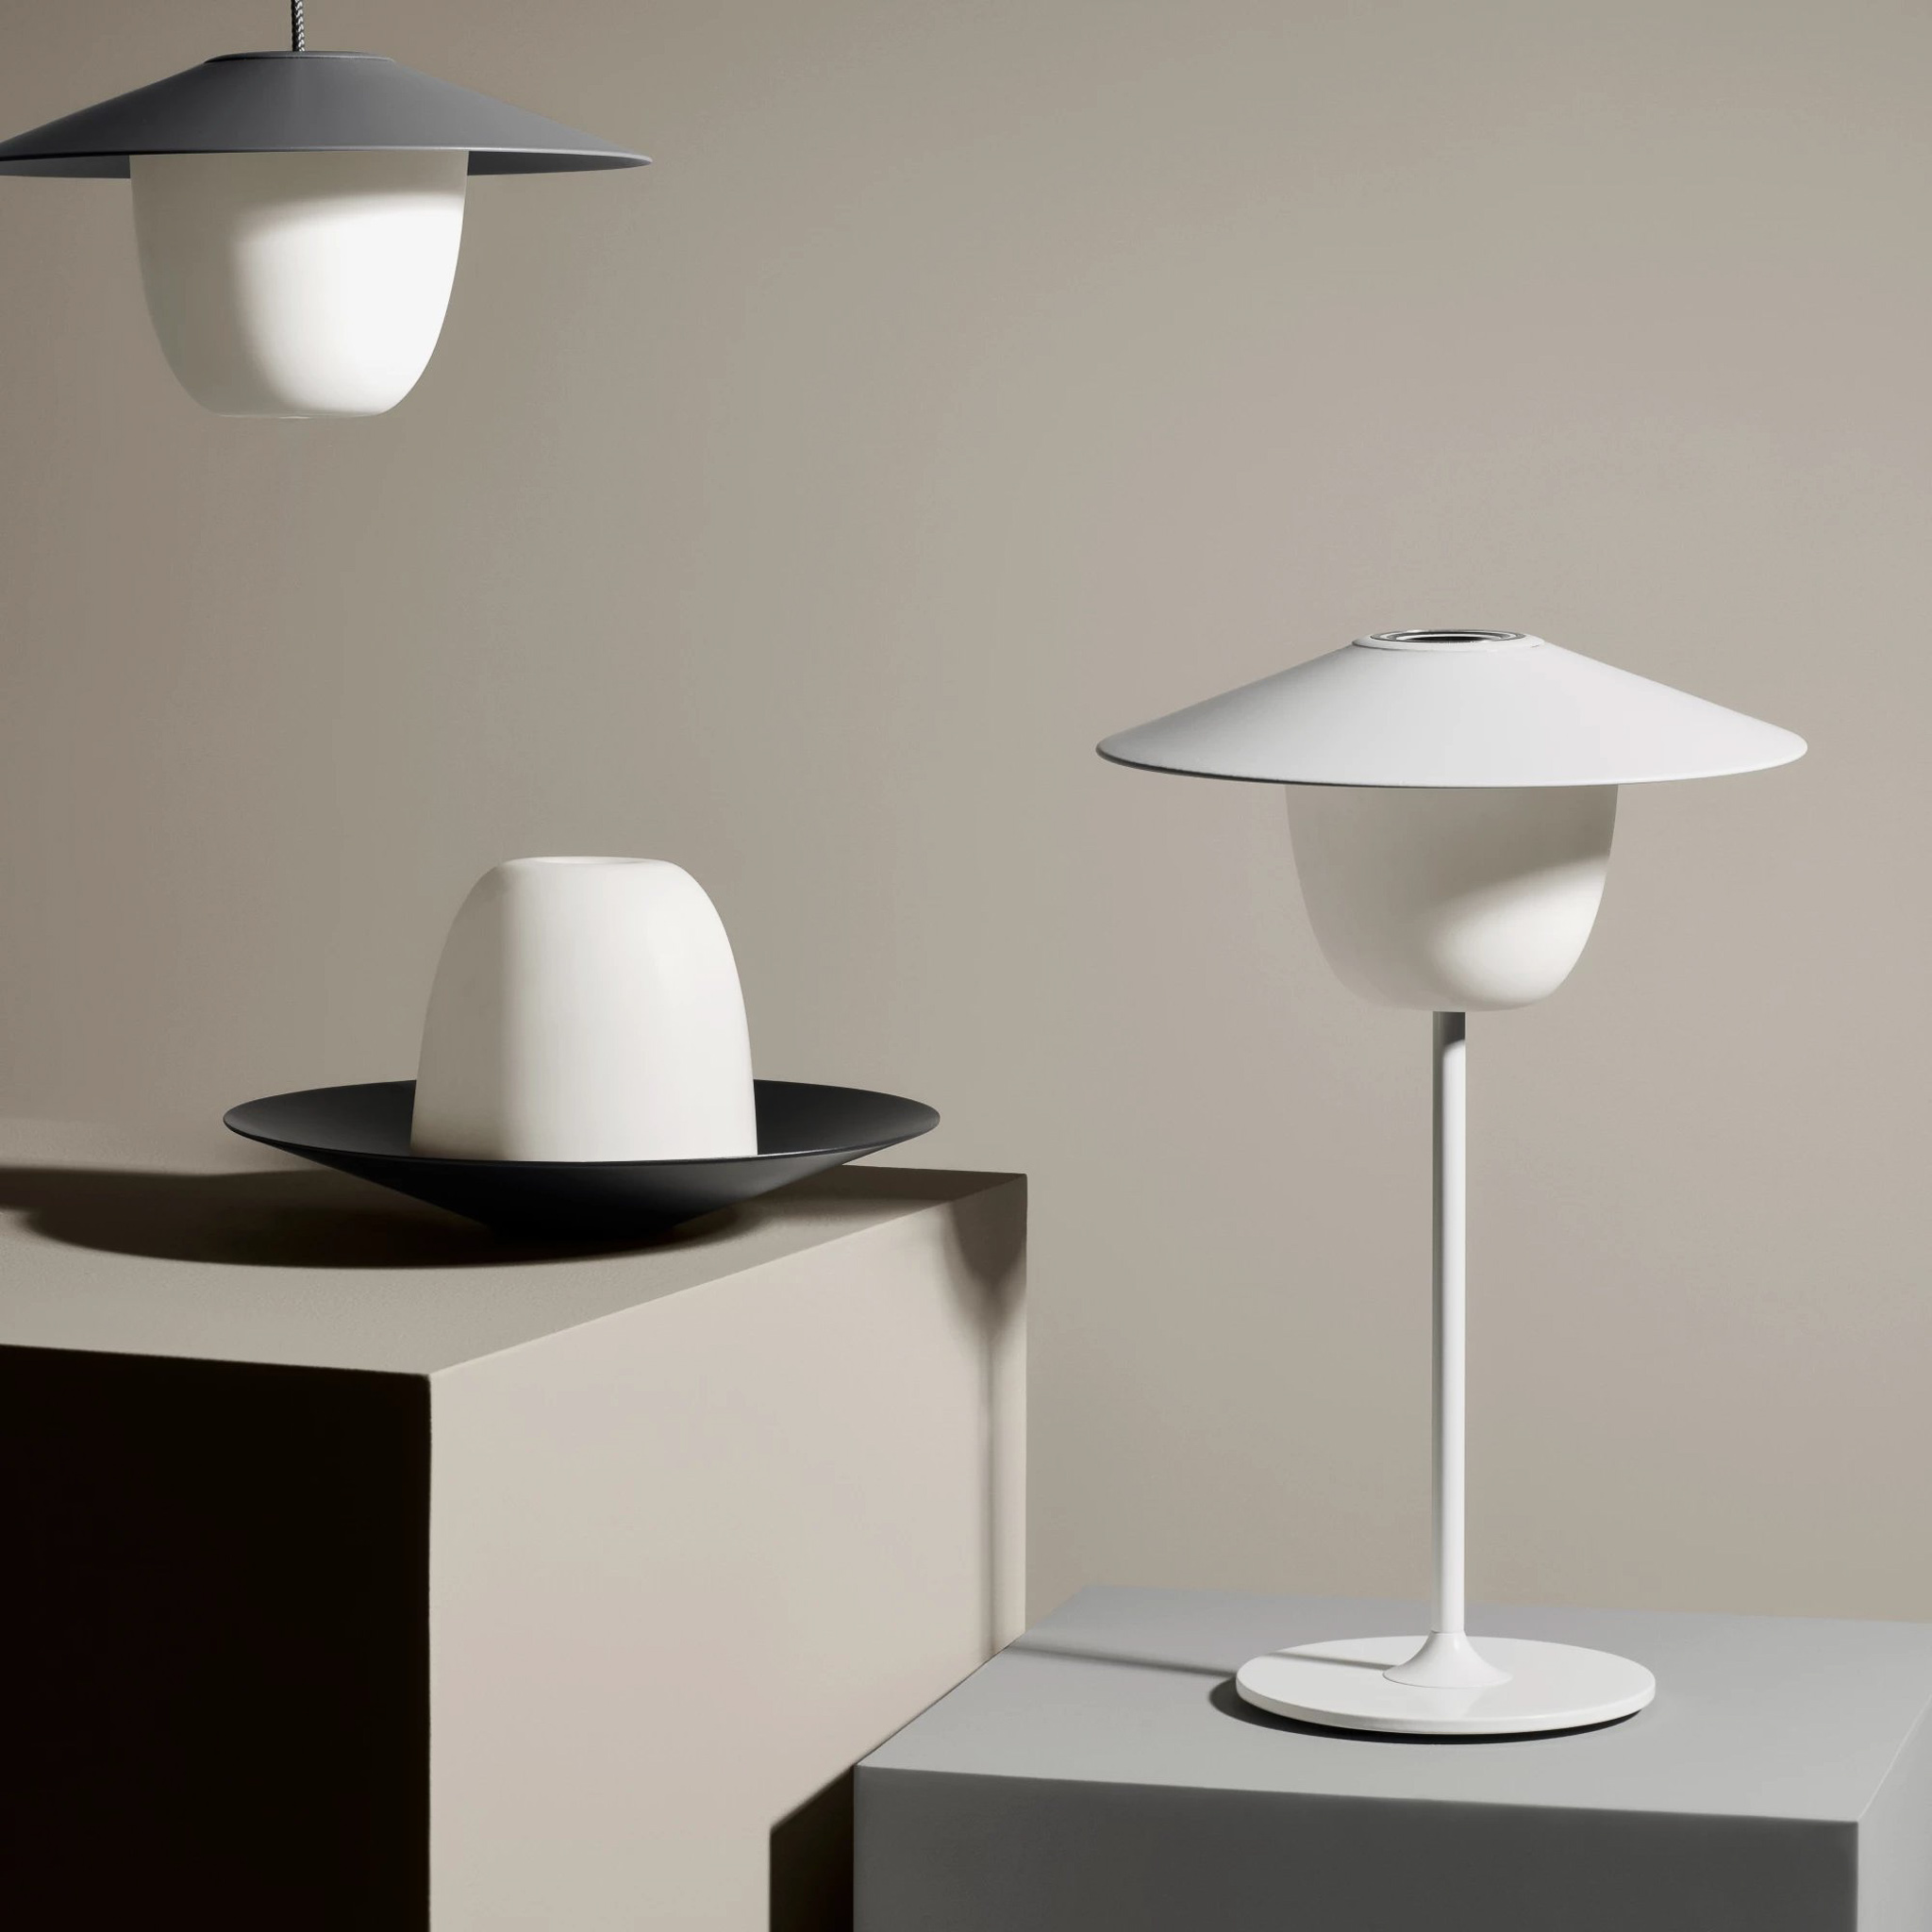 BLOMUS // ANI LAMP - MOBILE LED TABLE LAMP | MAGNET